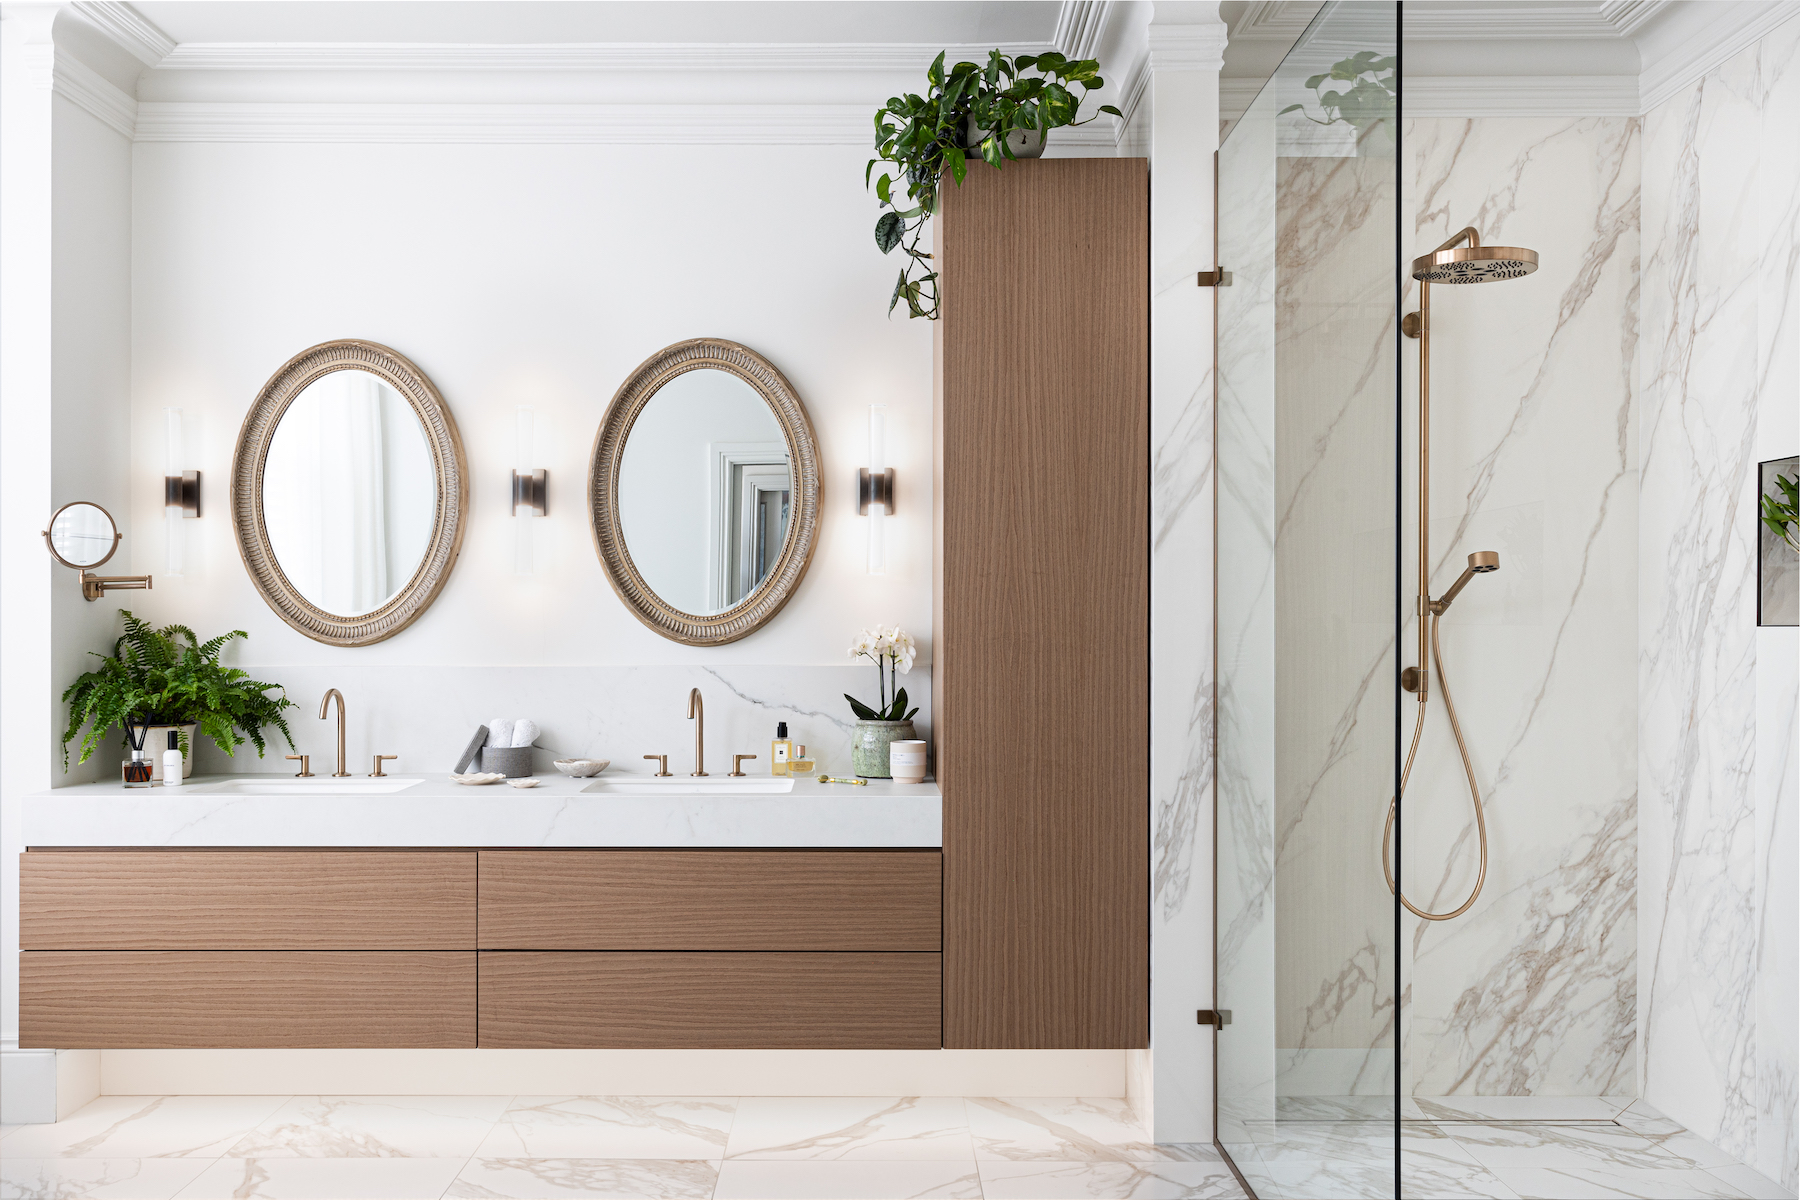 Contemporary Bathroom Designed Bespoke by Pfeiffer Design. Bespoke window treatments and custom lighting design. Neutral colour palette with warm lighting design